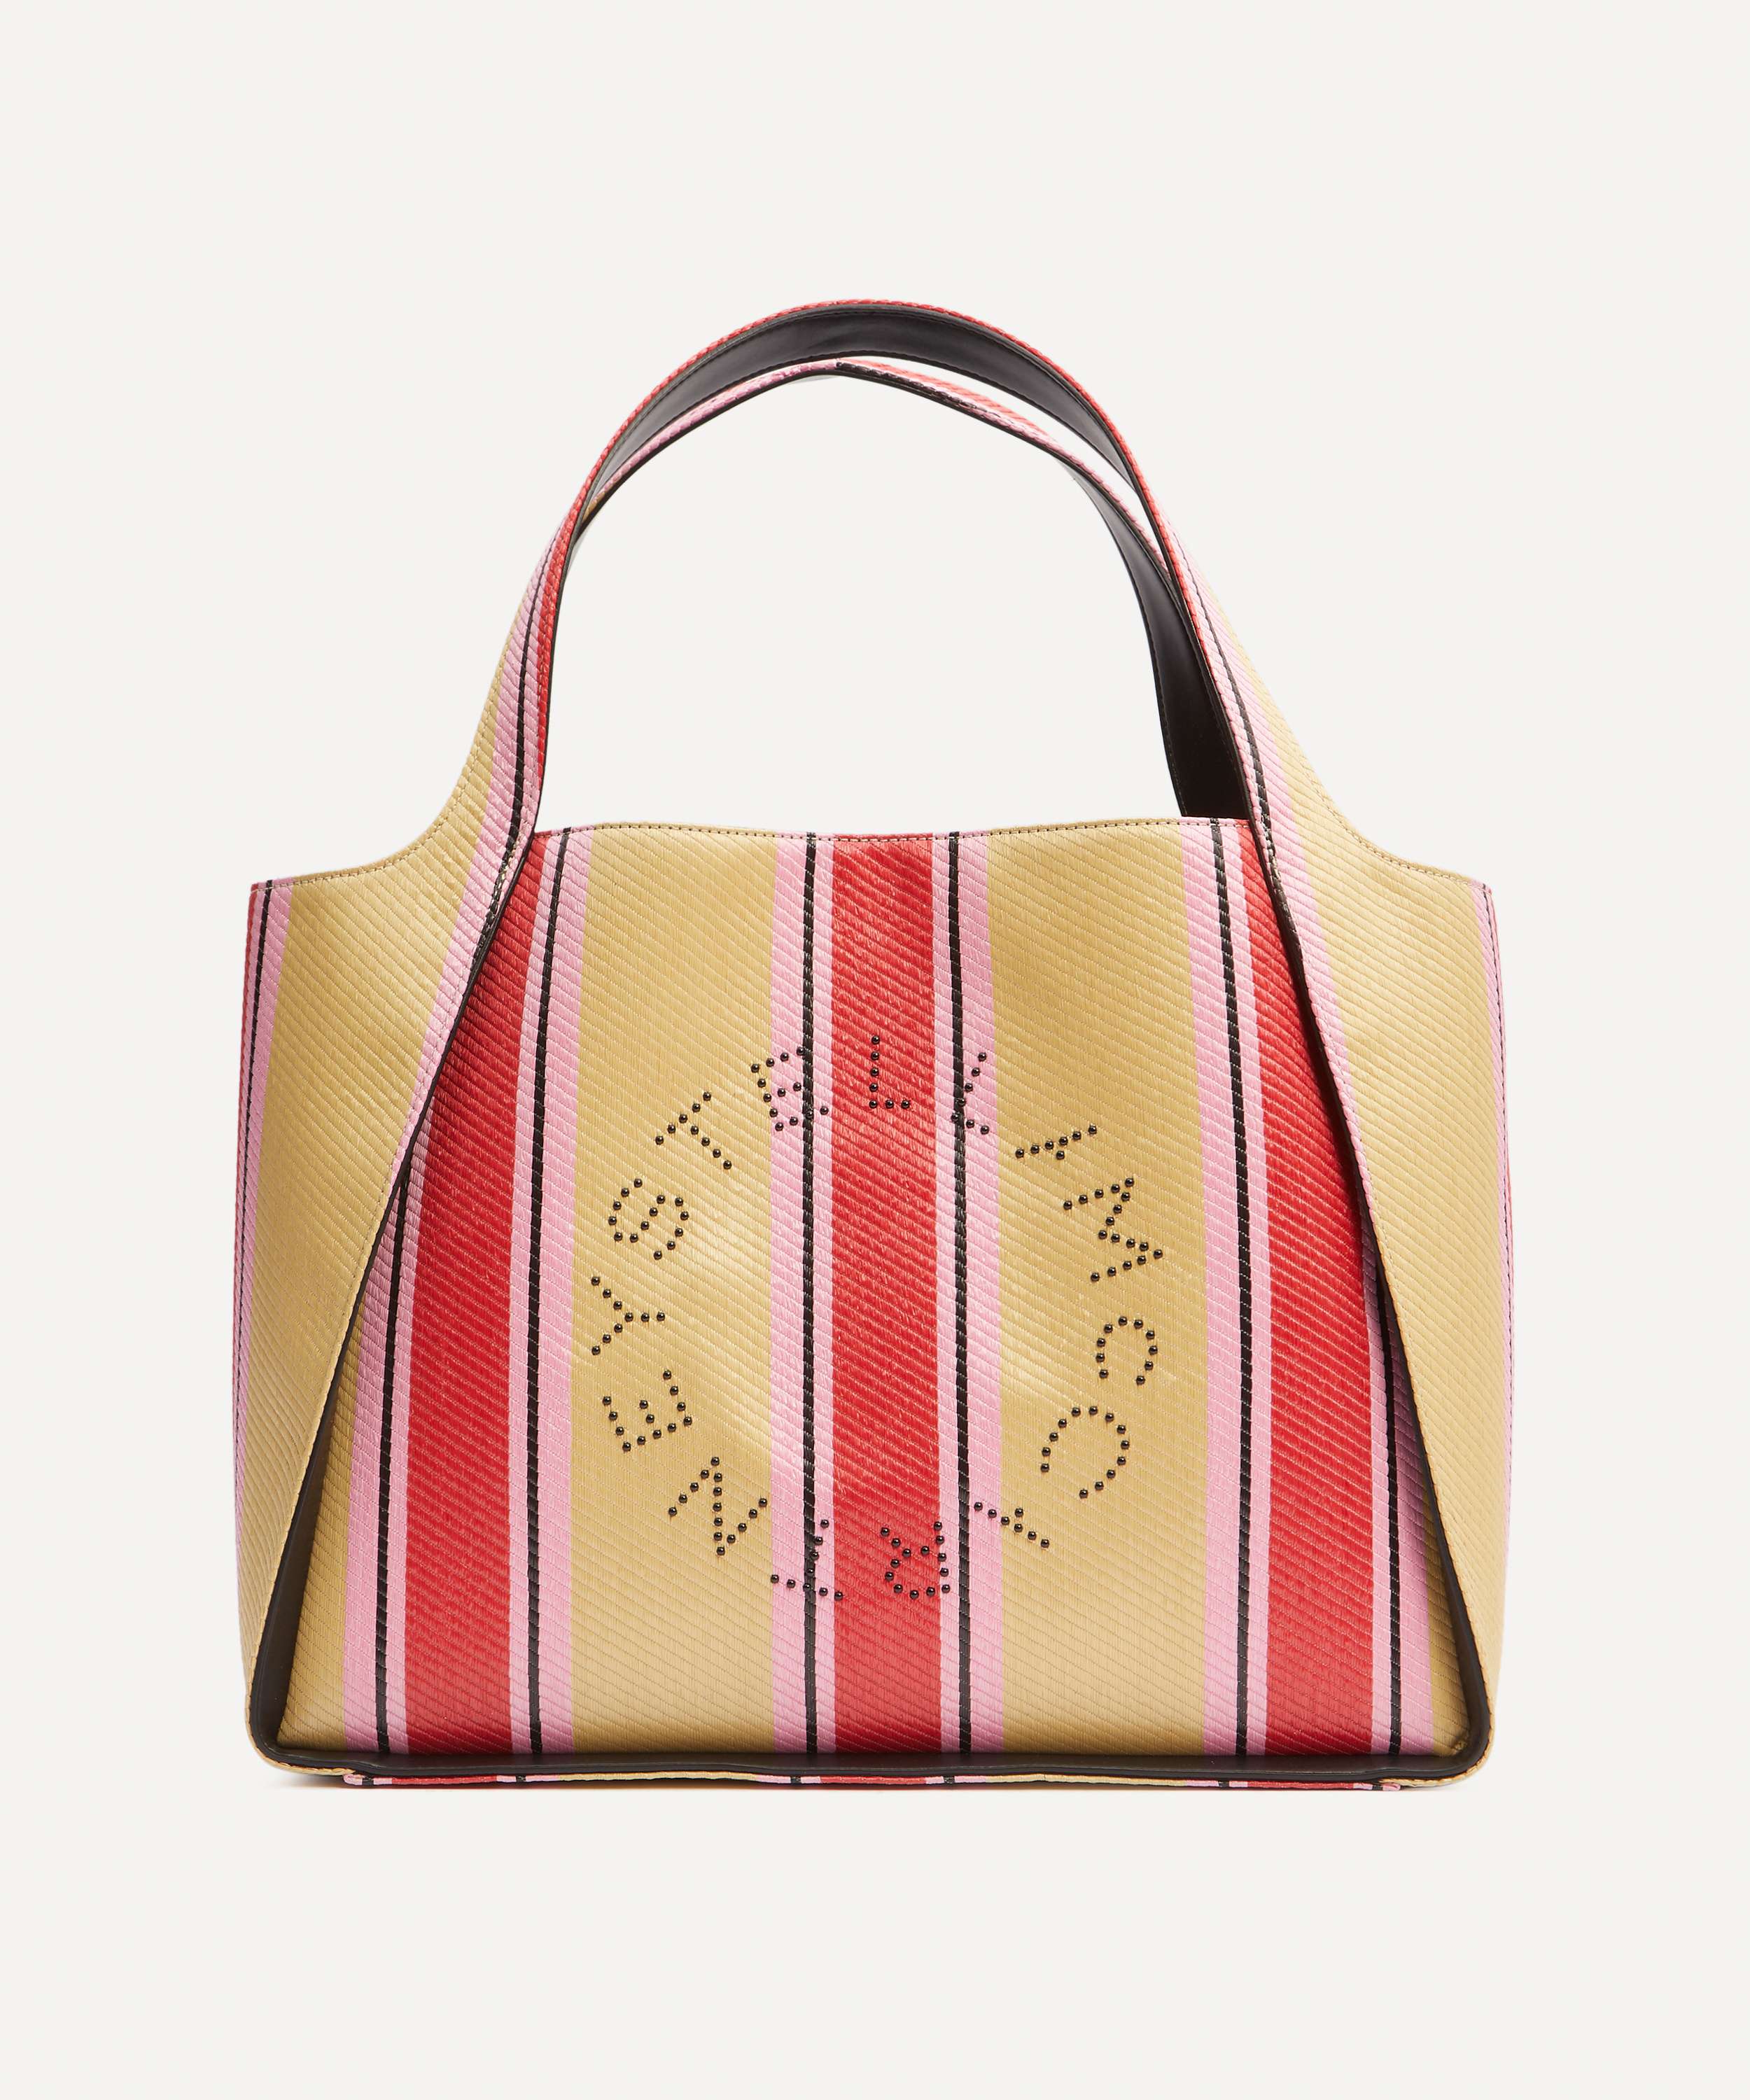 Arm Candy of the week- Issey Miyake's iconic Bao Bao bag